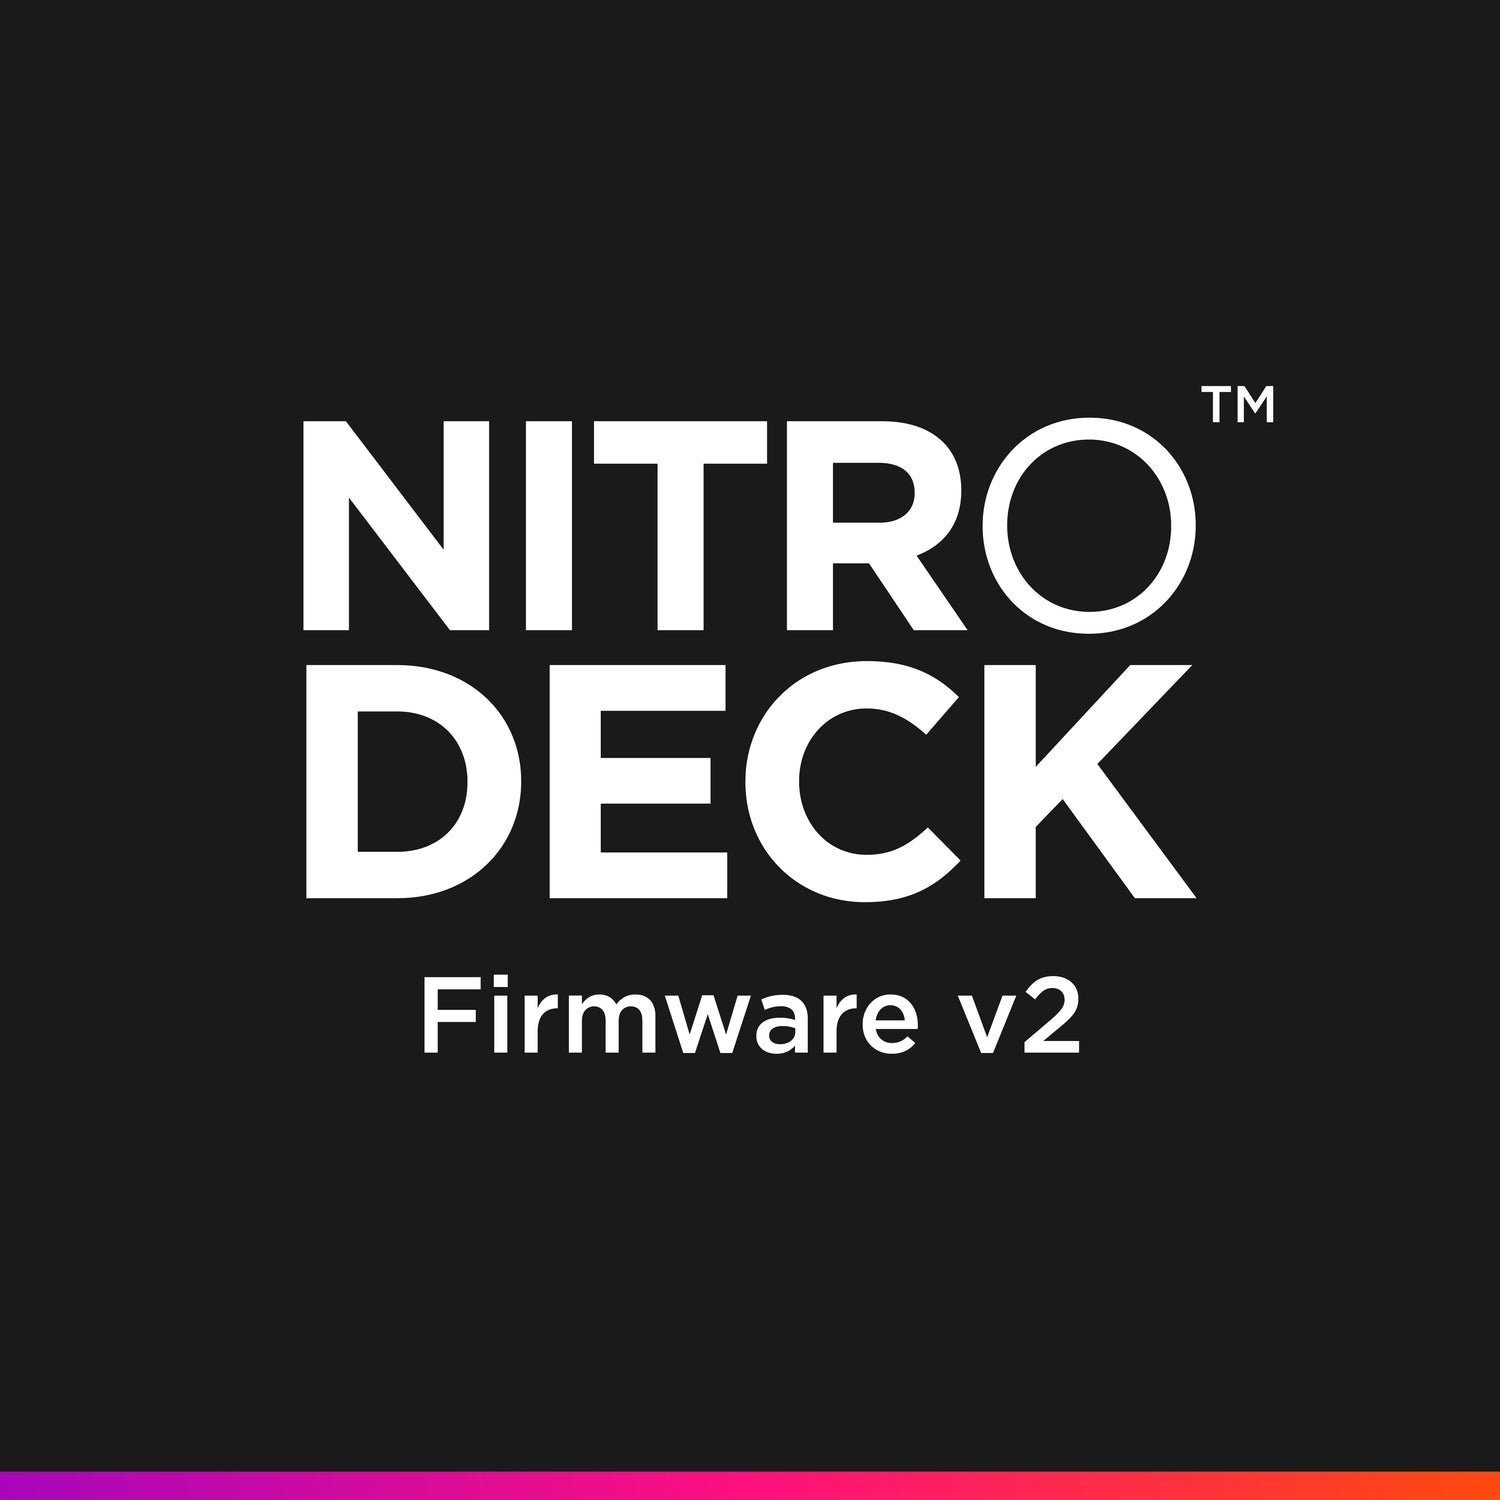 Nitro Deck Firmware v2